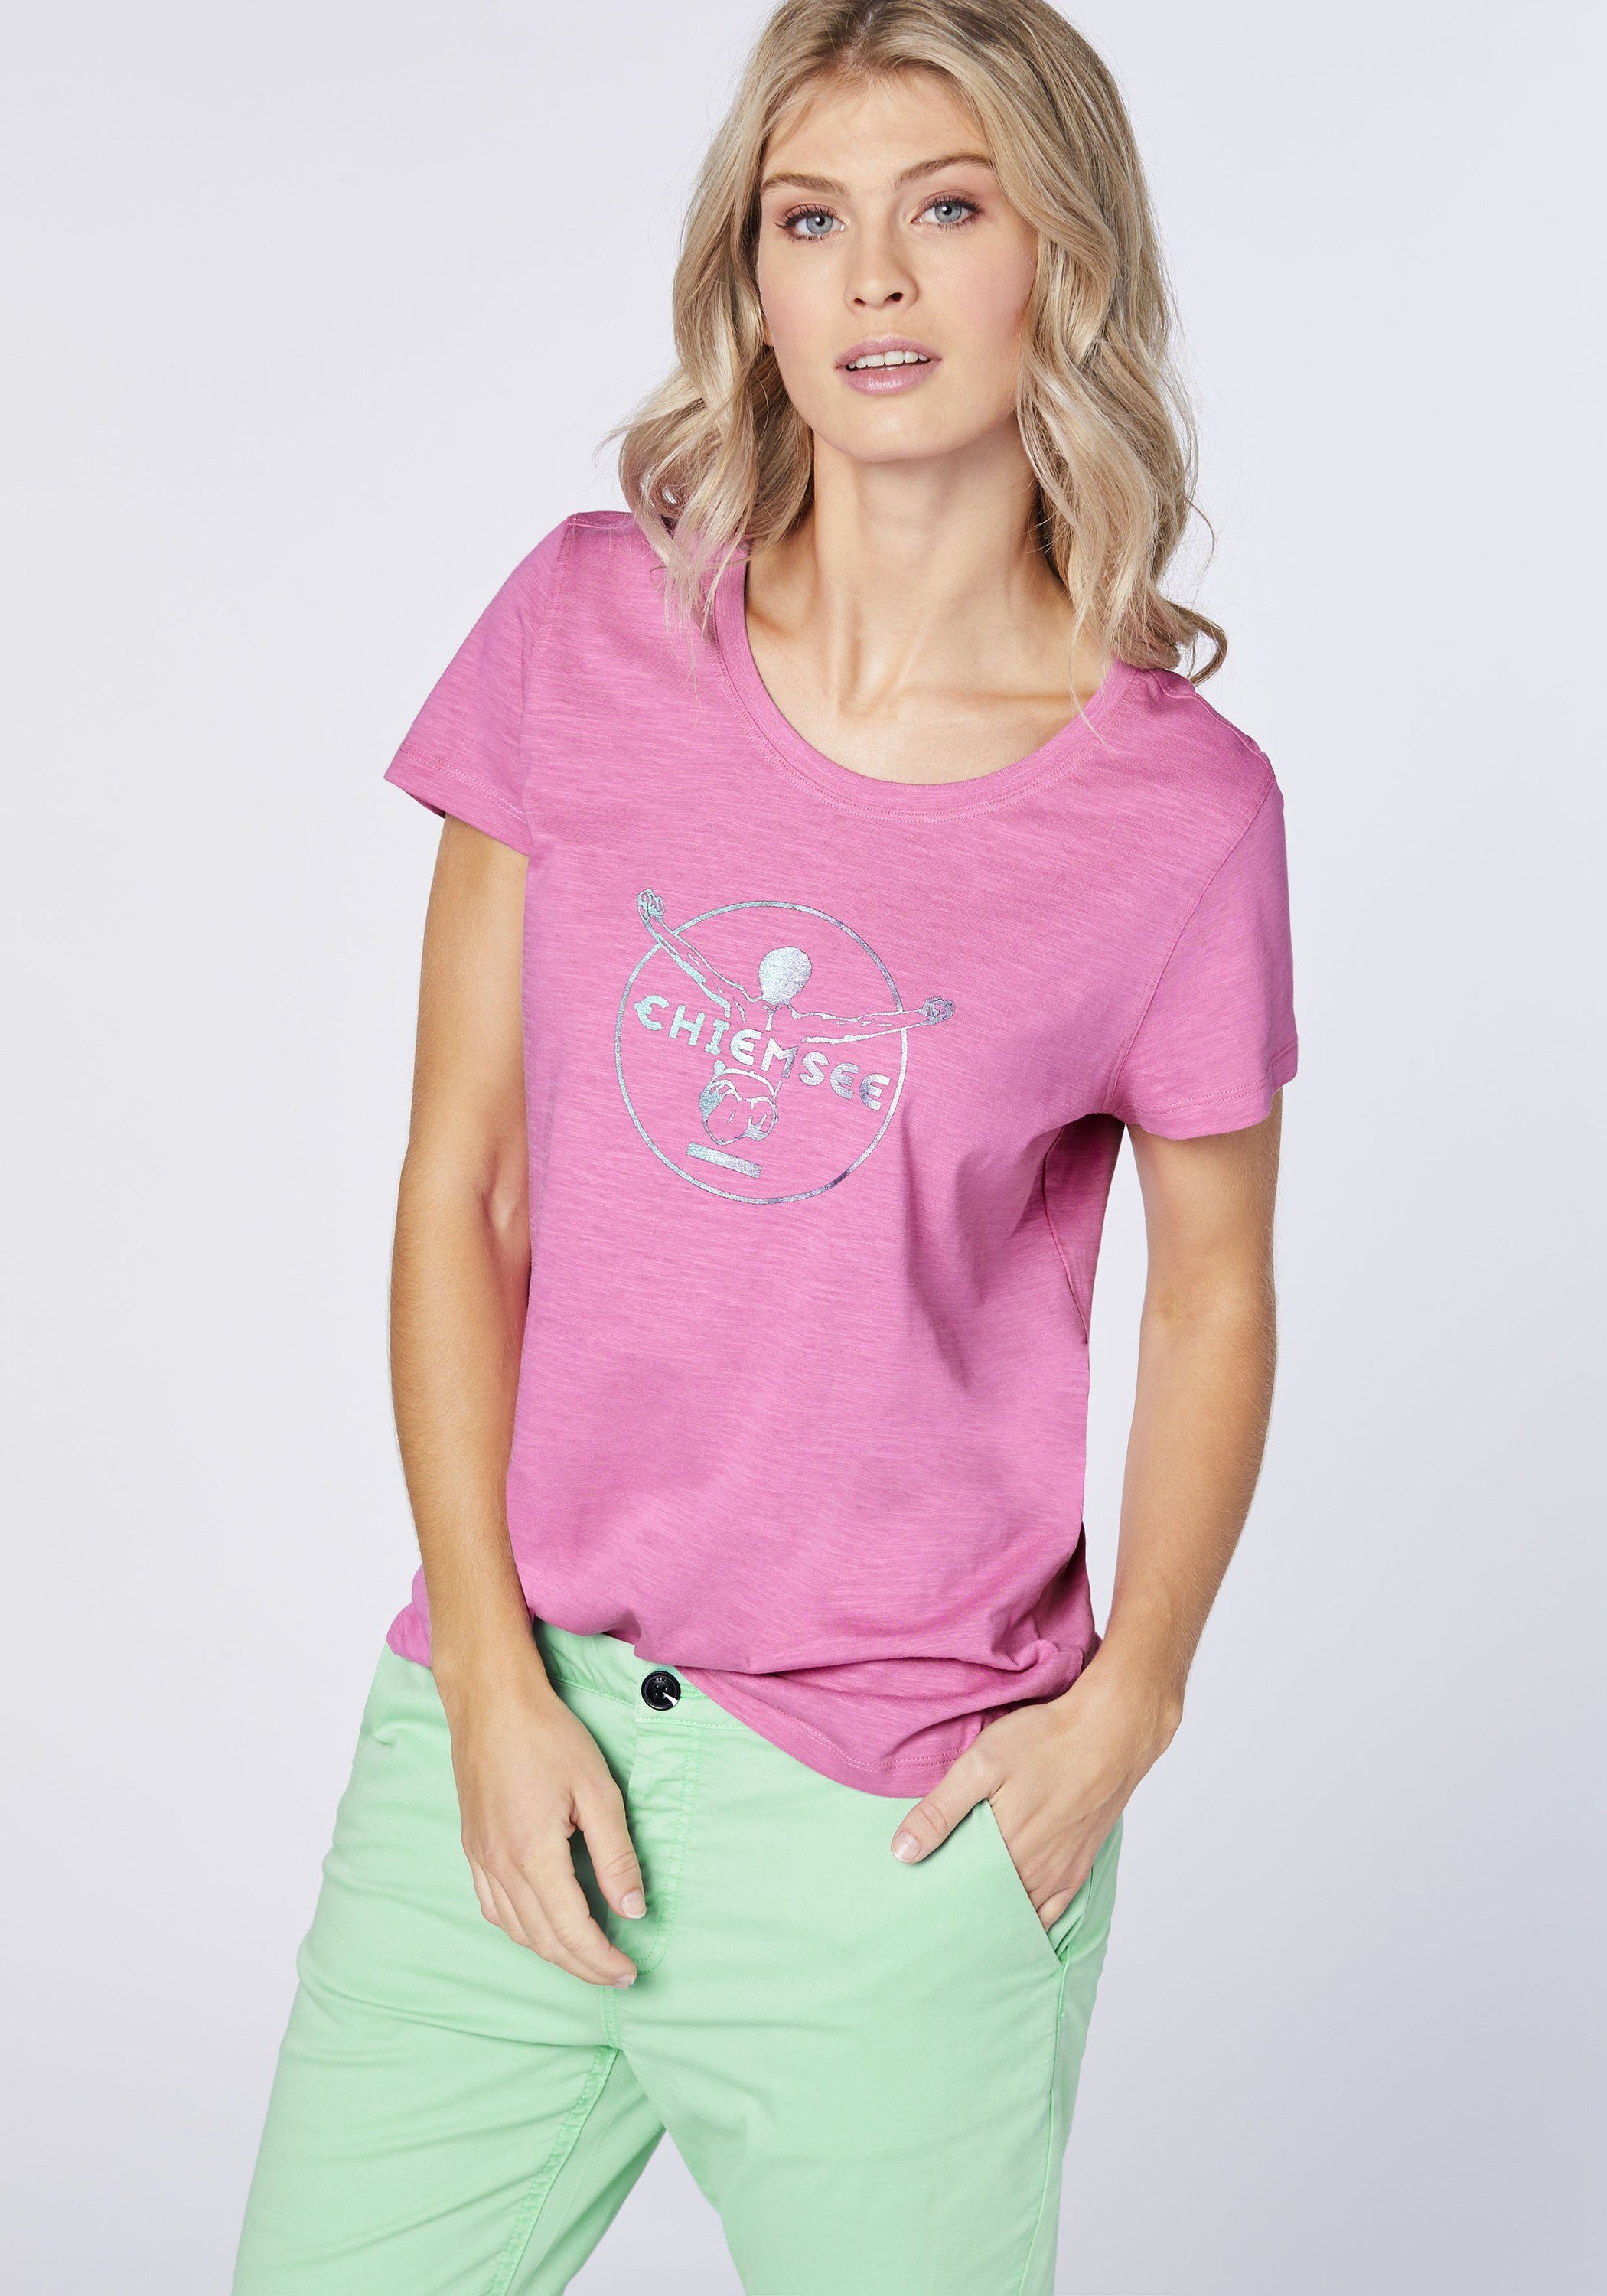 Print-Shirt Chiemsee mit T-Shirt 1 Jumper-Frontprint Pink Super